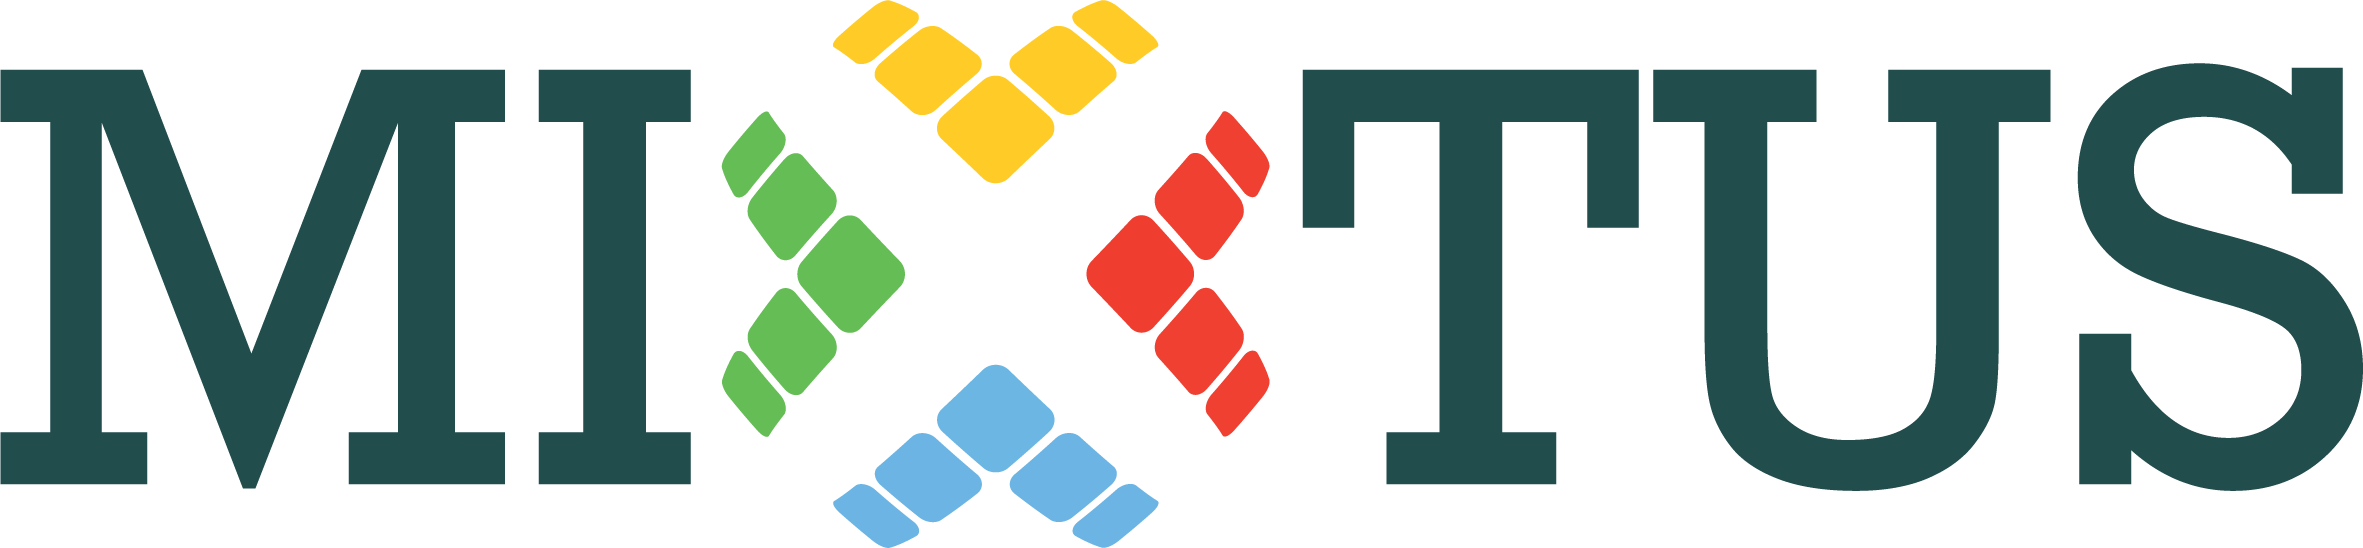 mixtus_logo